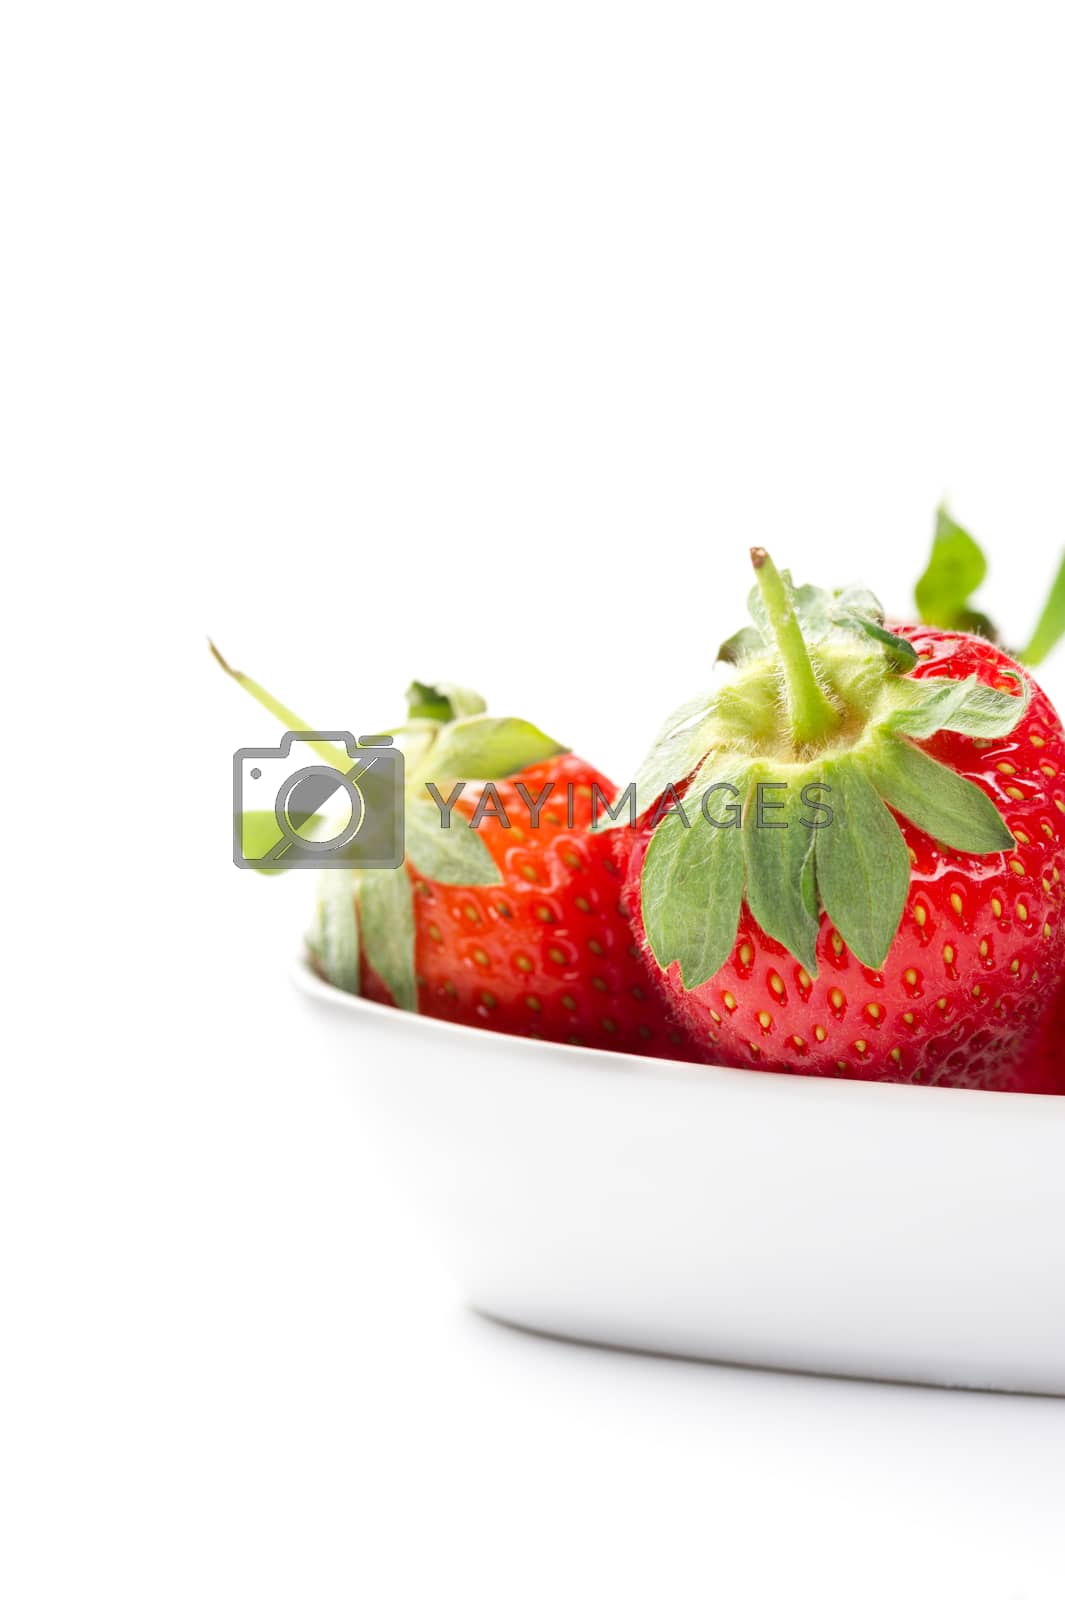 Royalty free image of Juicy ripe red home grown strawberries in a bowl by MOELLERTHOMSEN